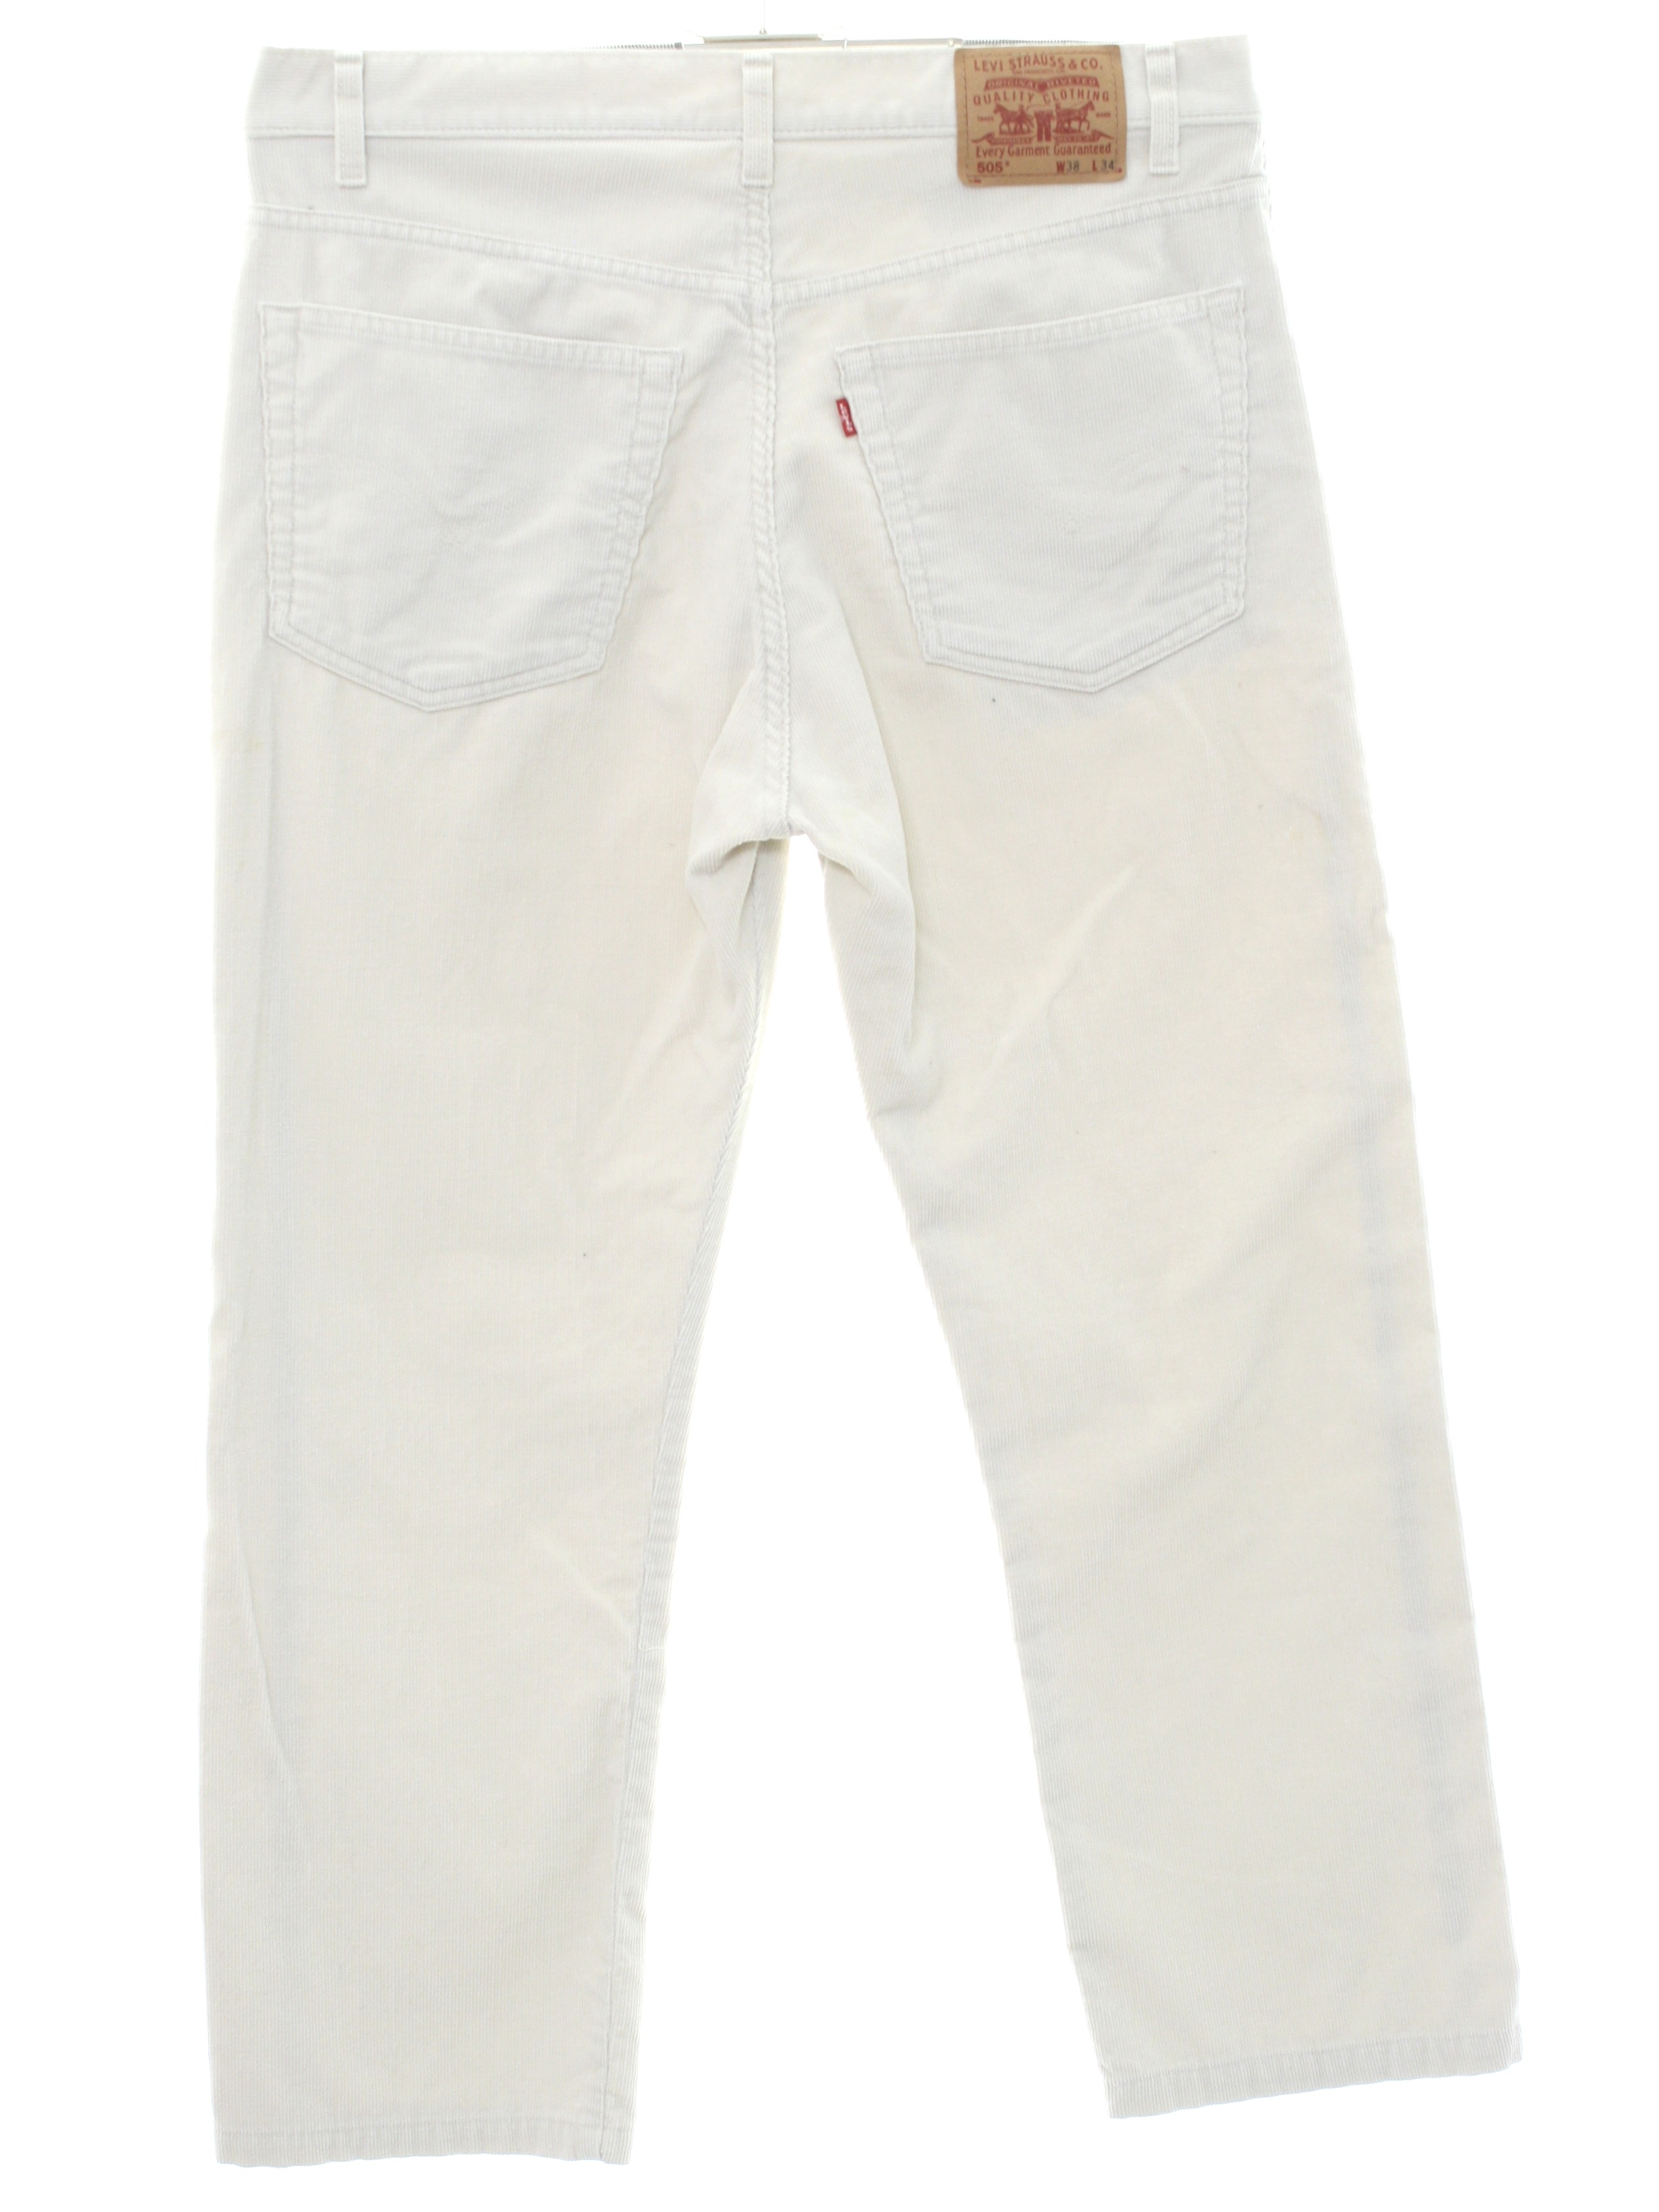 mens white levi 505 jeans